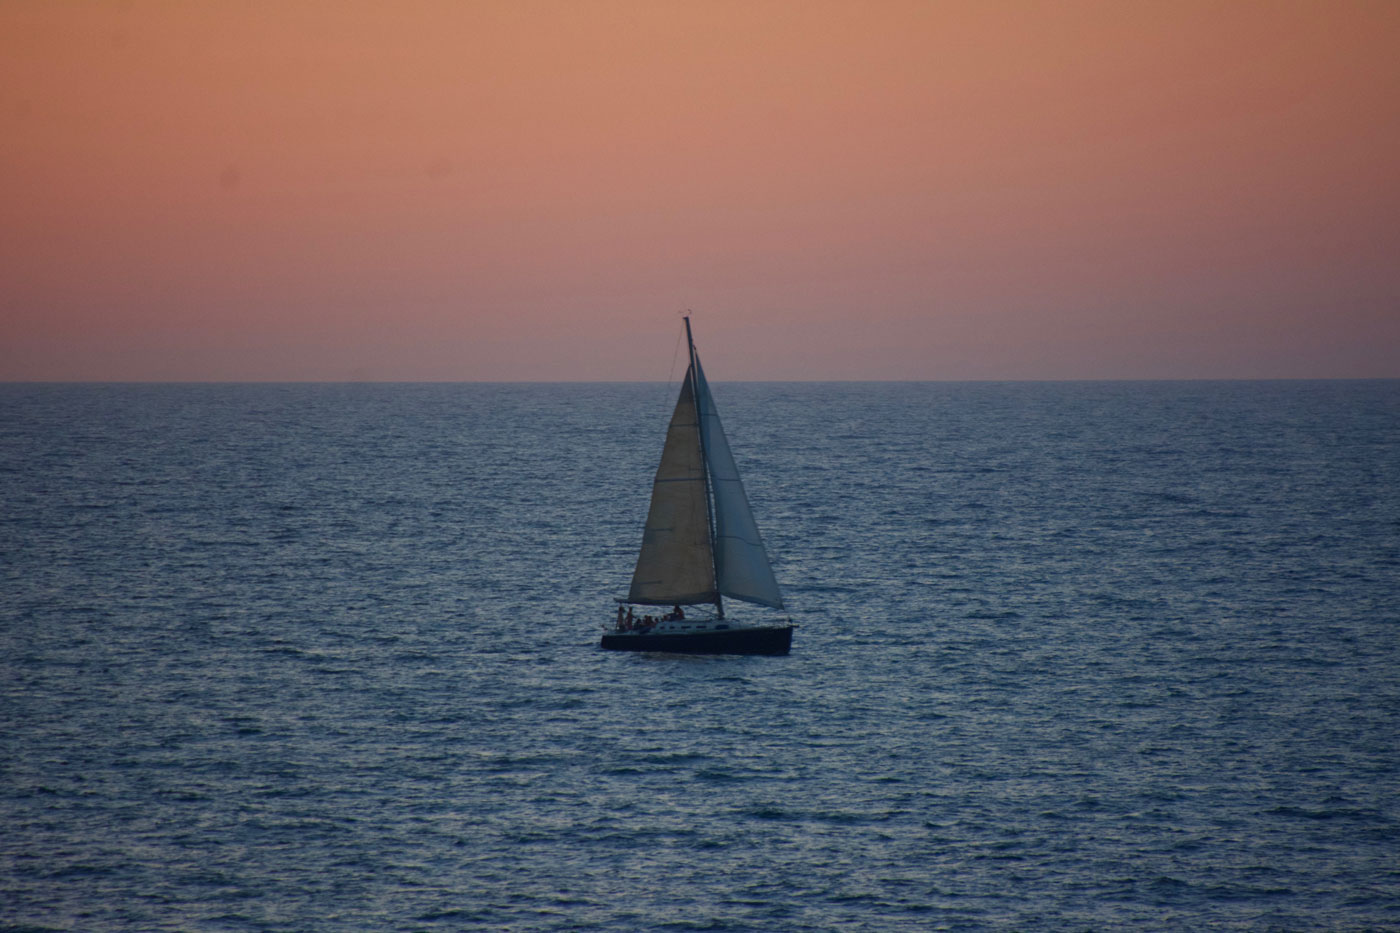 Tel Aviv Sunset with Sailboat